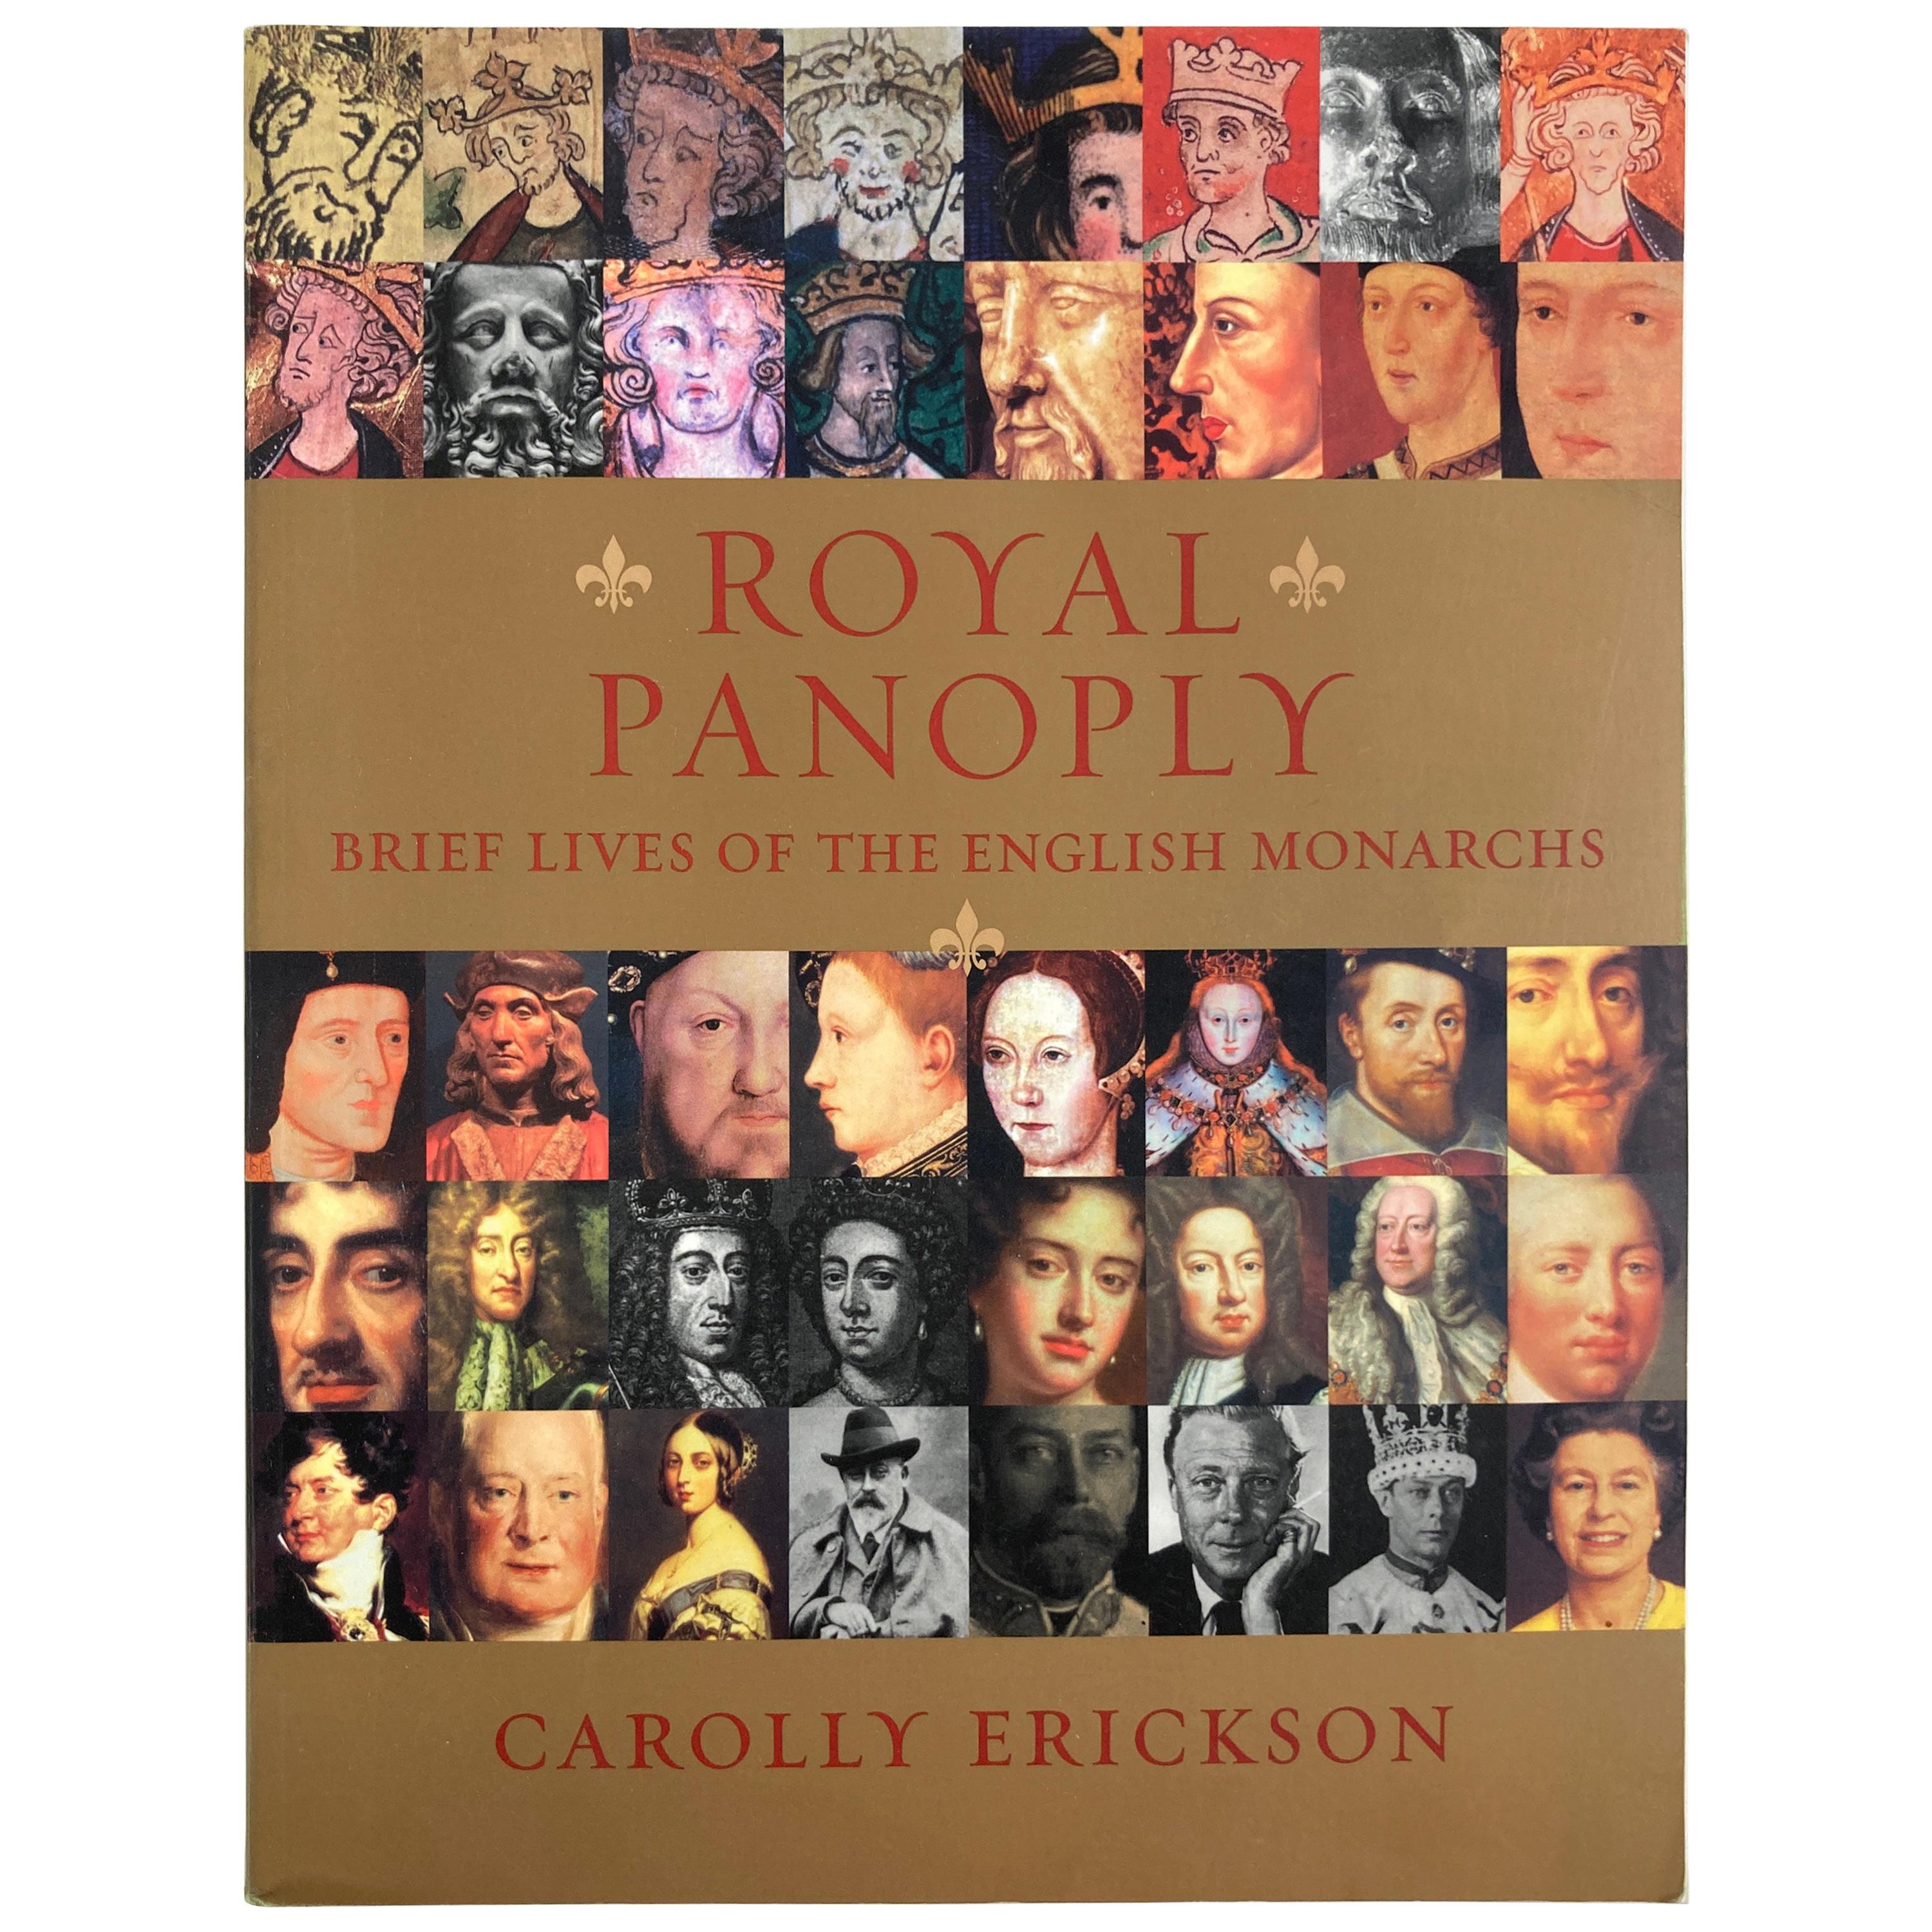 Livre « Royal Panoply Brief Lives of the English Monarchs » (Les vies des Monarchs anglais par Carolly Erickson)